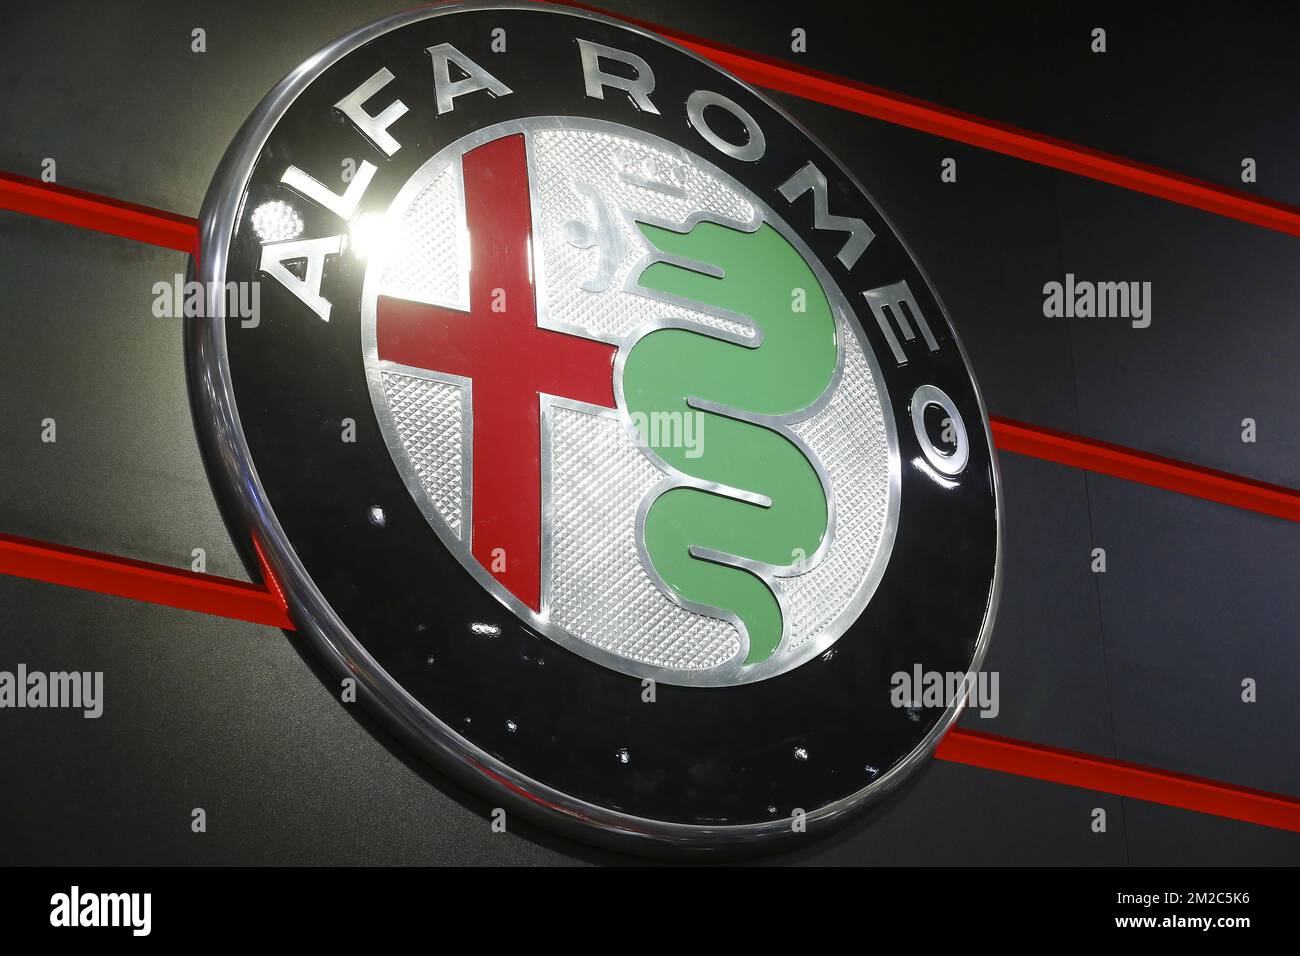 Alfa romeo logo hi-res stock photography and images - Alamy